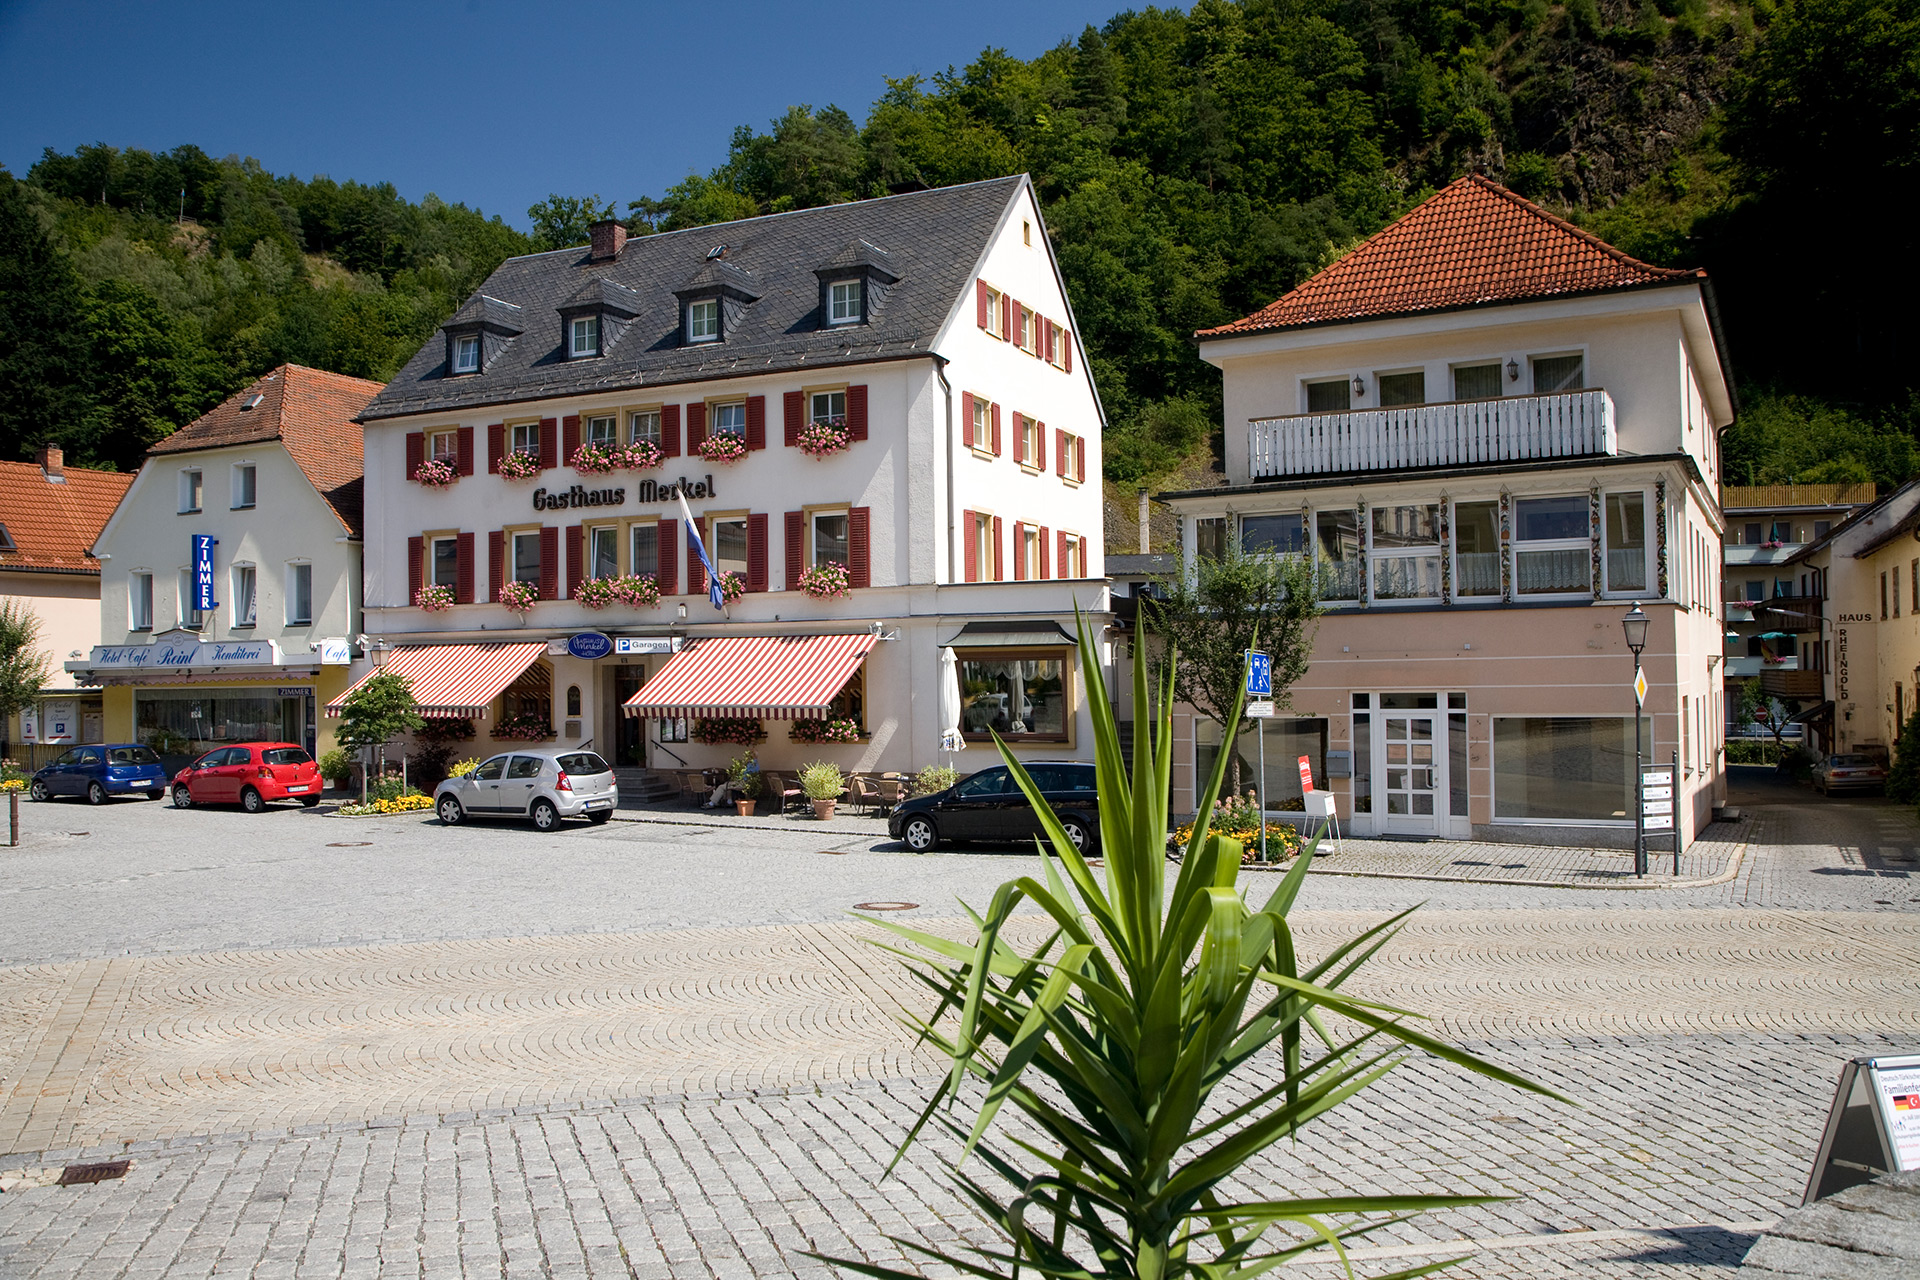 Hotel Merkel in Bad Berneck